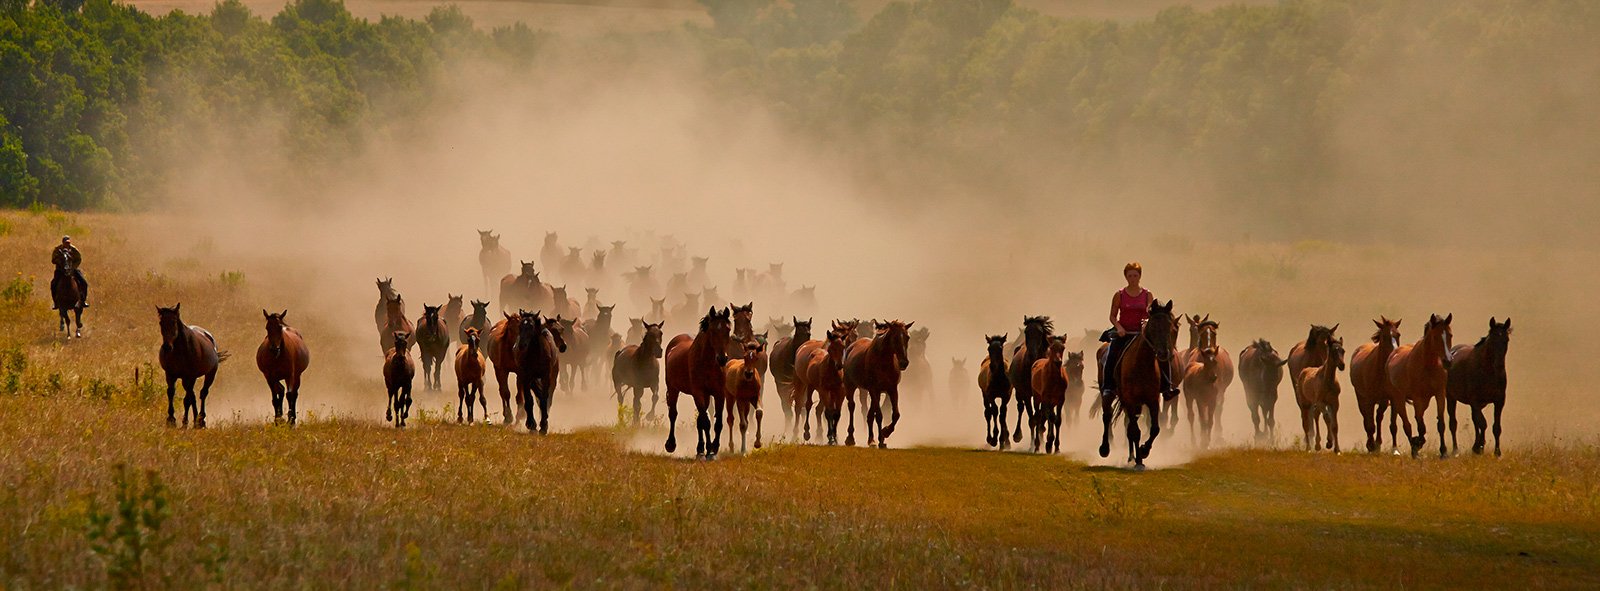 кони,лошади,пыль,табун, Fotojazz